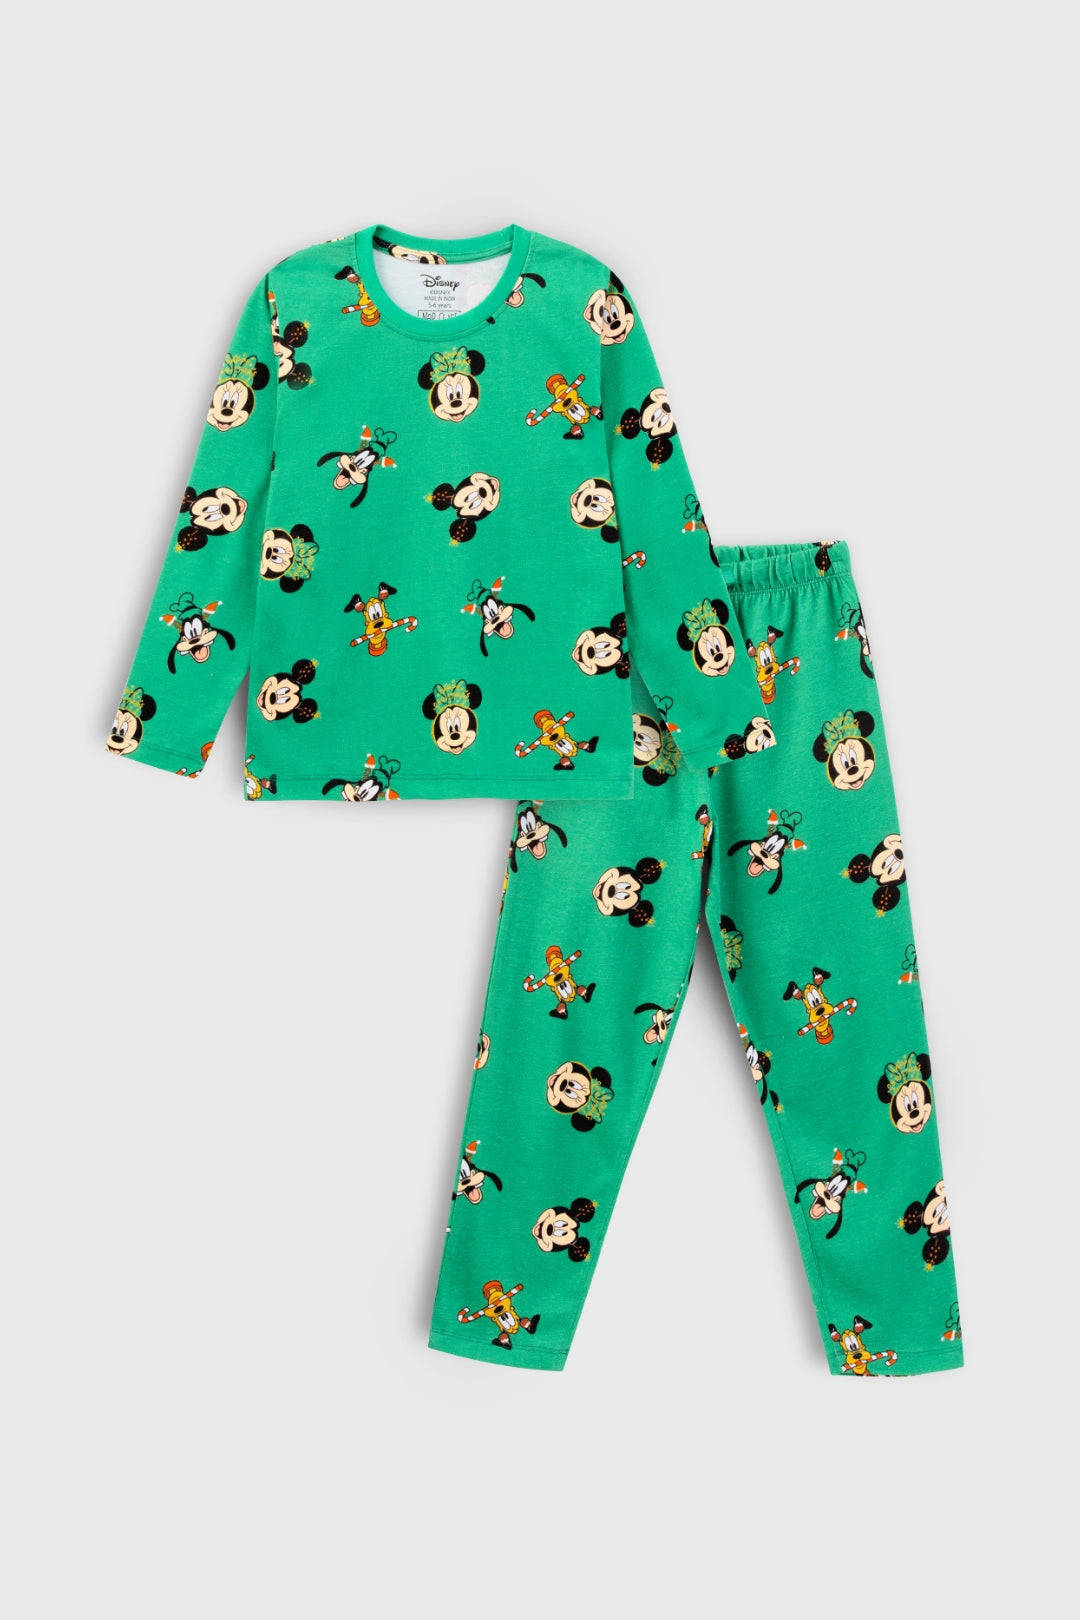 Mickey & Friends Pajama set for Family